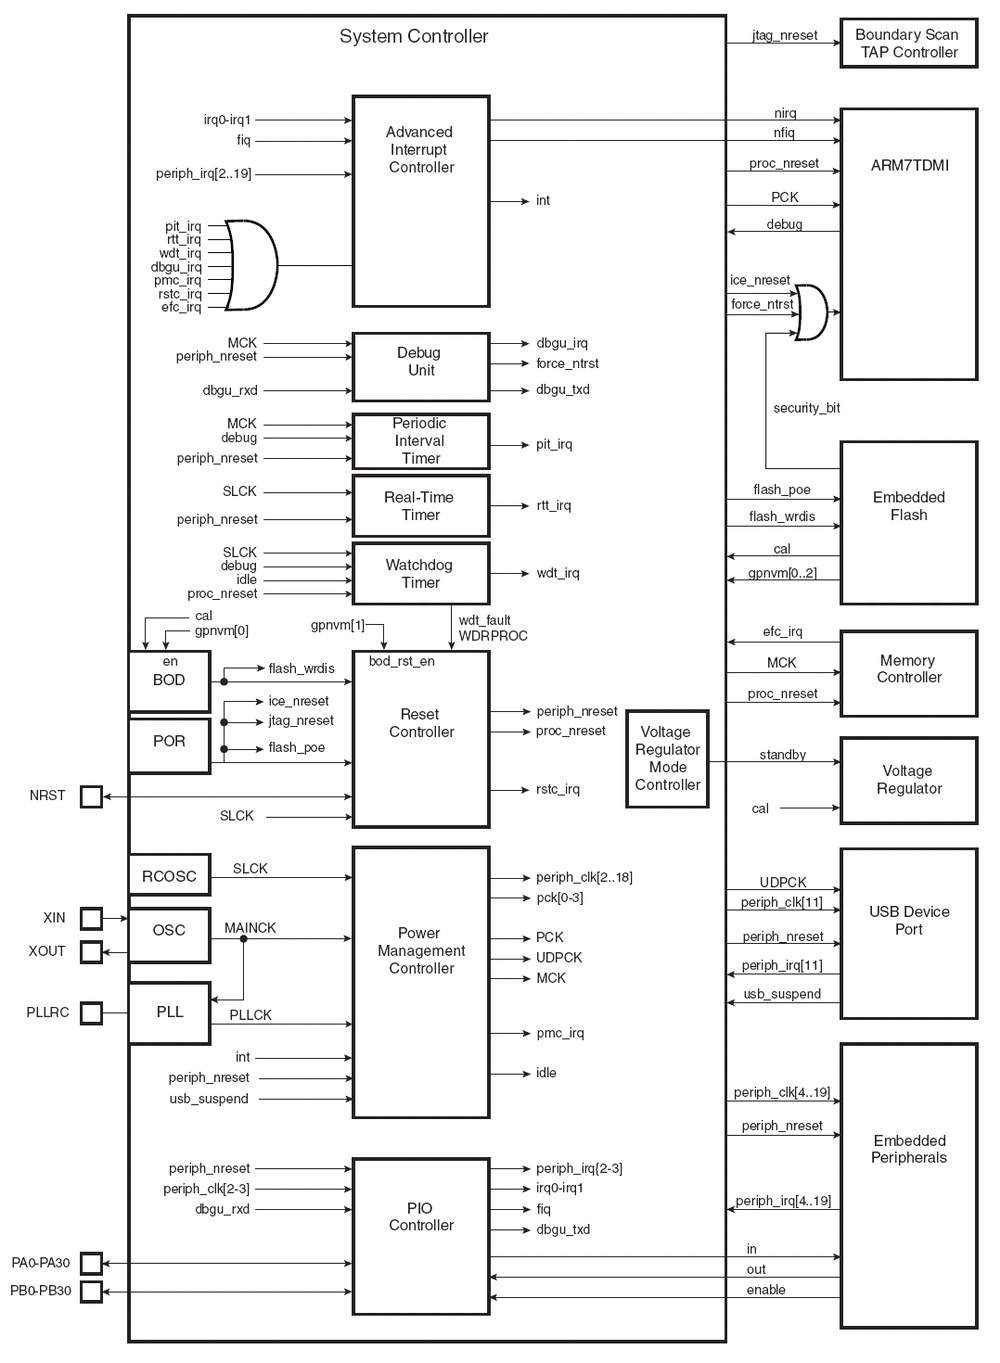 System Controller Block Diagram